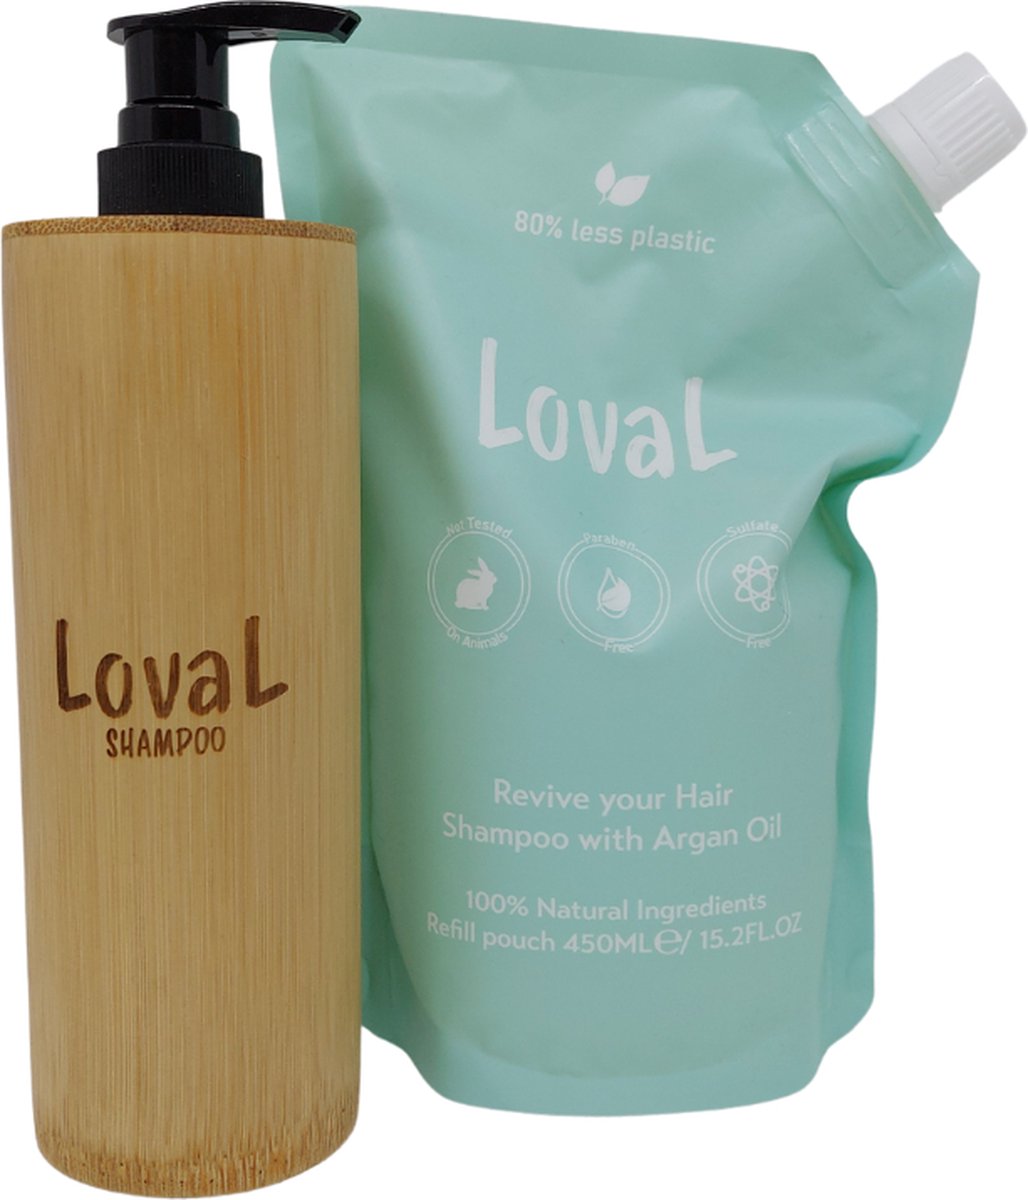 Loval - Starterset - Kerst cadeau voor haar / hem - Organische shampoo met argan olie (navulzak 450ML) en Loval hervulbare bamboe dispensers (200ML) - Shampoo en Conditioner zonder sulfaten, parabenen, siliconen en minerale olieën